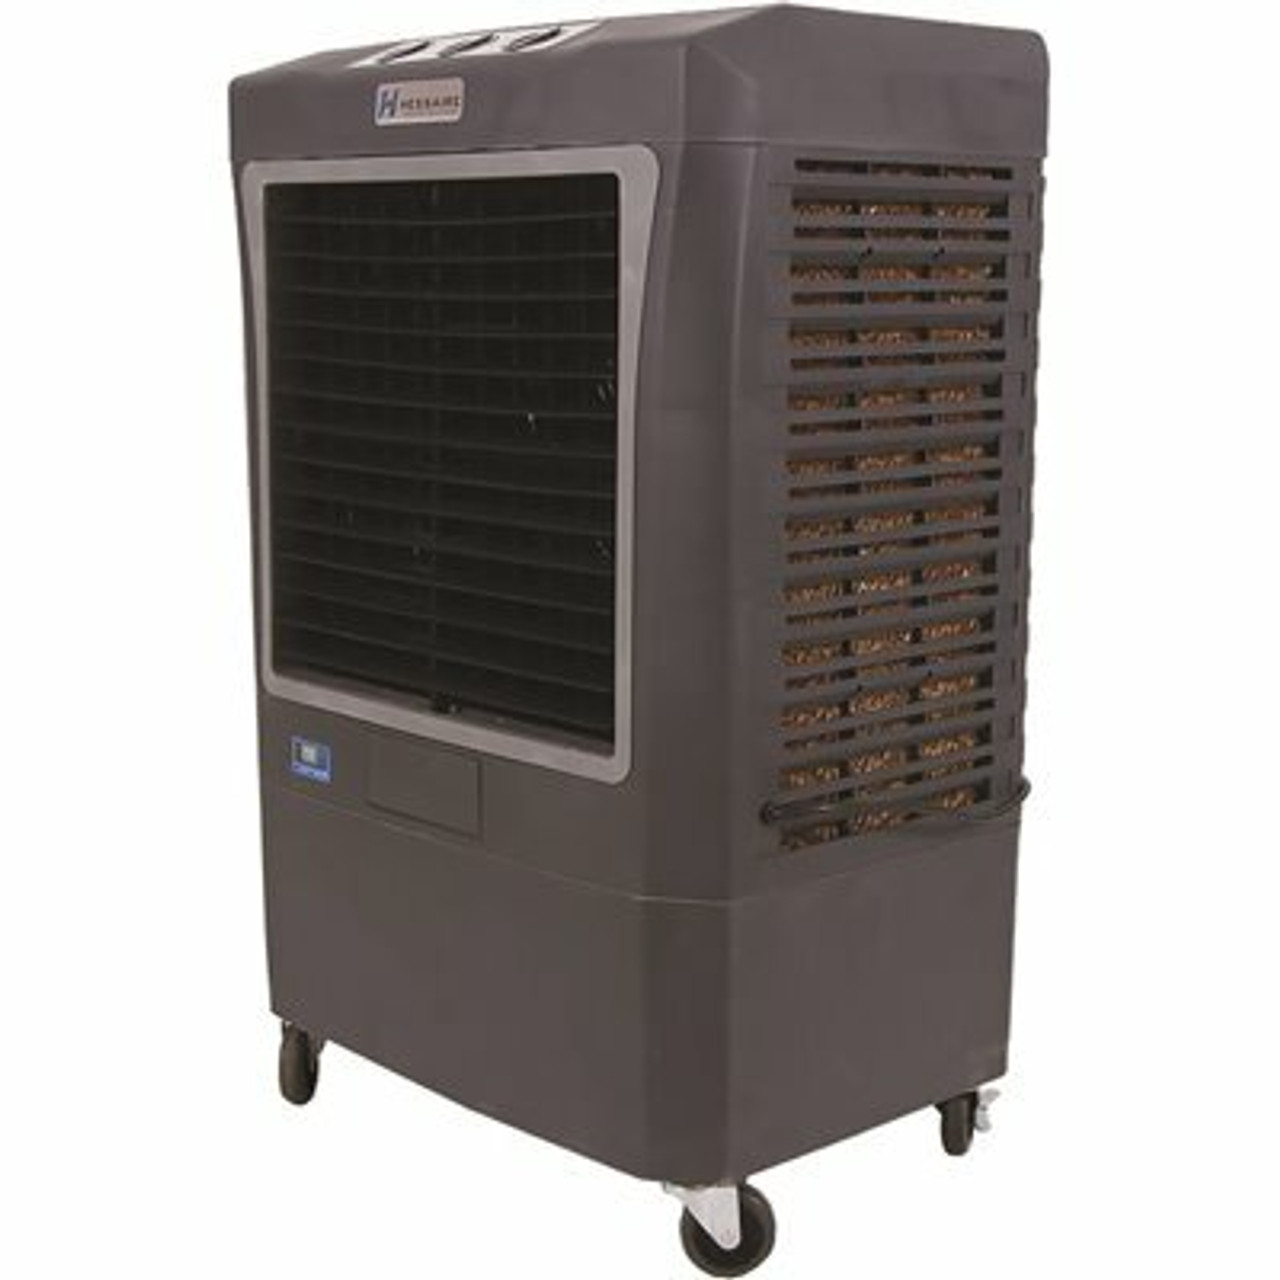 Hessaire 3,100 Cfm 3-Speed Portable Evaporative Cooler (Swamp Cooler) For 950 Sq. Ft.